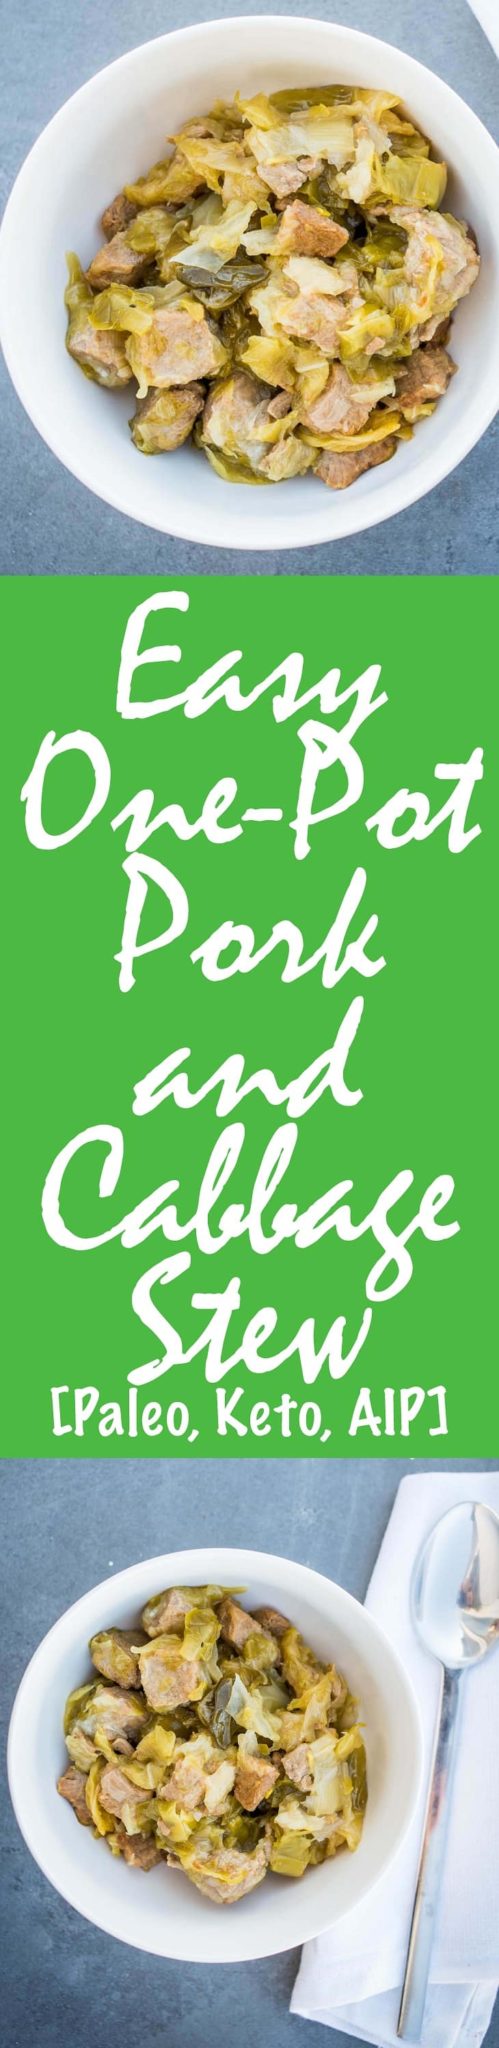 Easy One-Pot Pork and Cabbage Stew [Paleo, Keto, AIP] #paleo #keto #aip - https://paleoflourish.com/pork-cabbage-stew-paleo-keto-aip